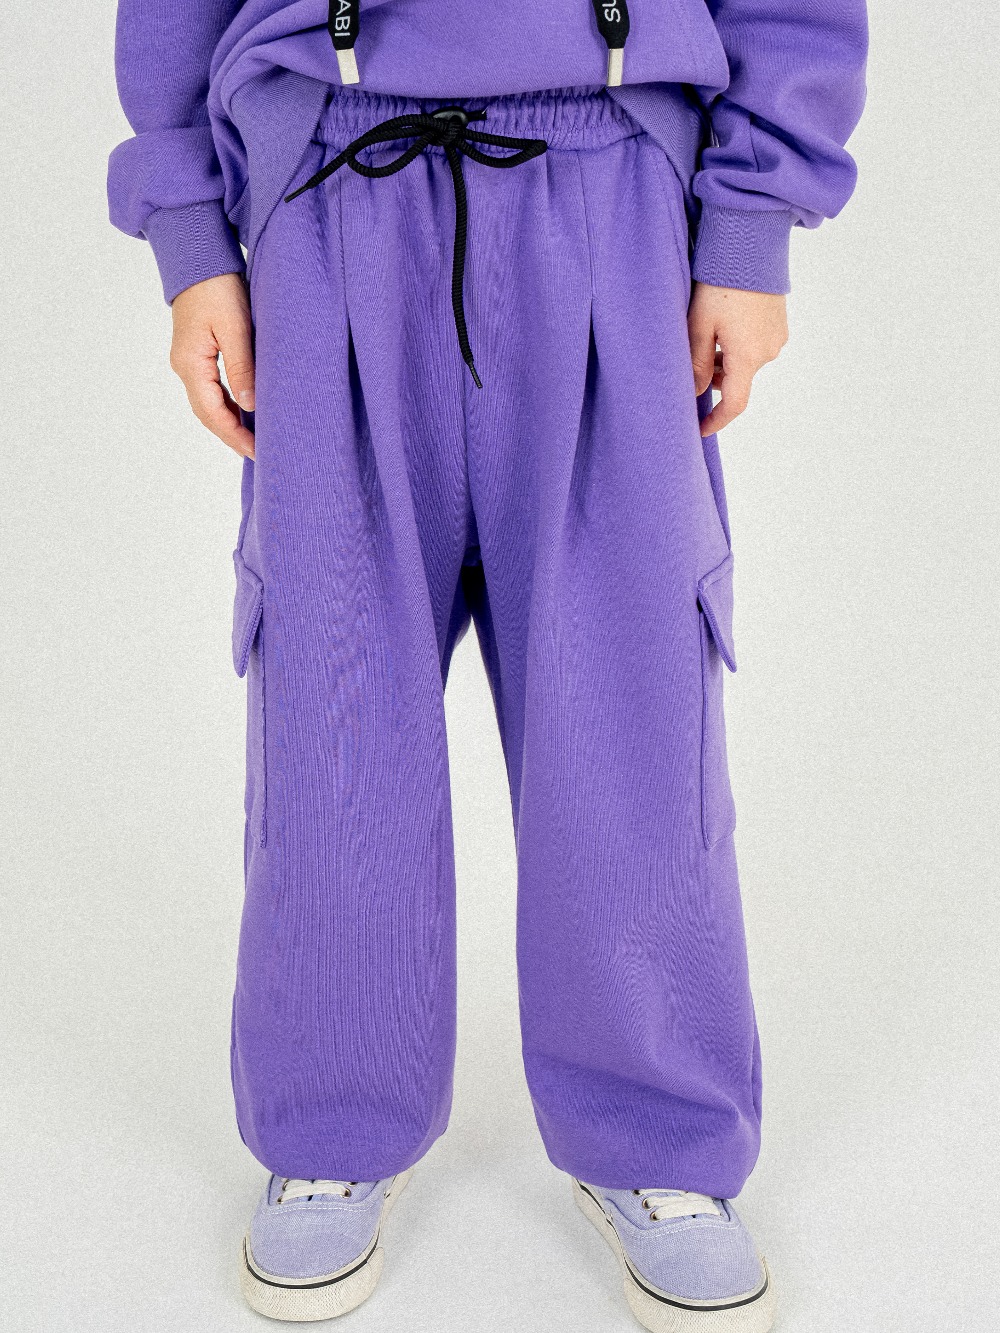 Twin Cargo Two-way pants : Purple ▶B품할인